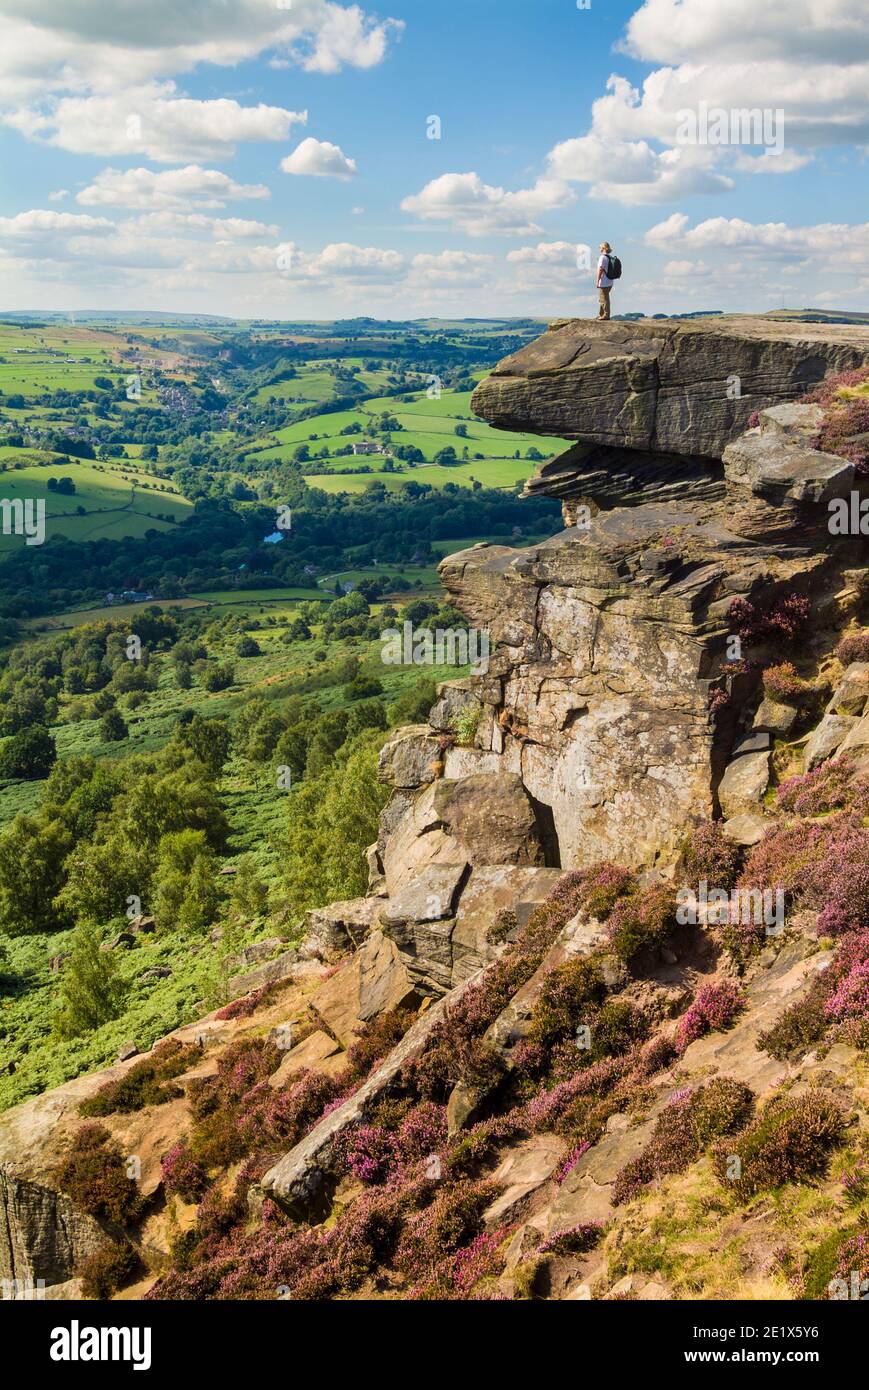 Hiker standing alone on Froggatt Edge near Chesterfield Derbyshire peak district national park England GB UK Europe Stock Photo